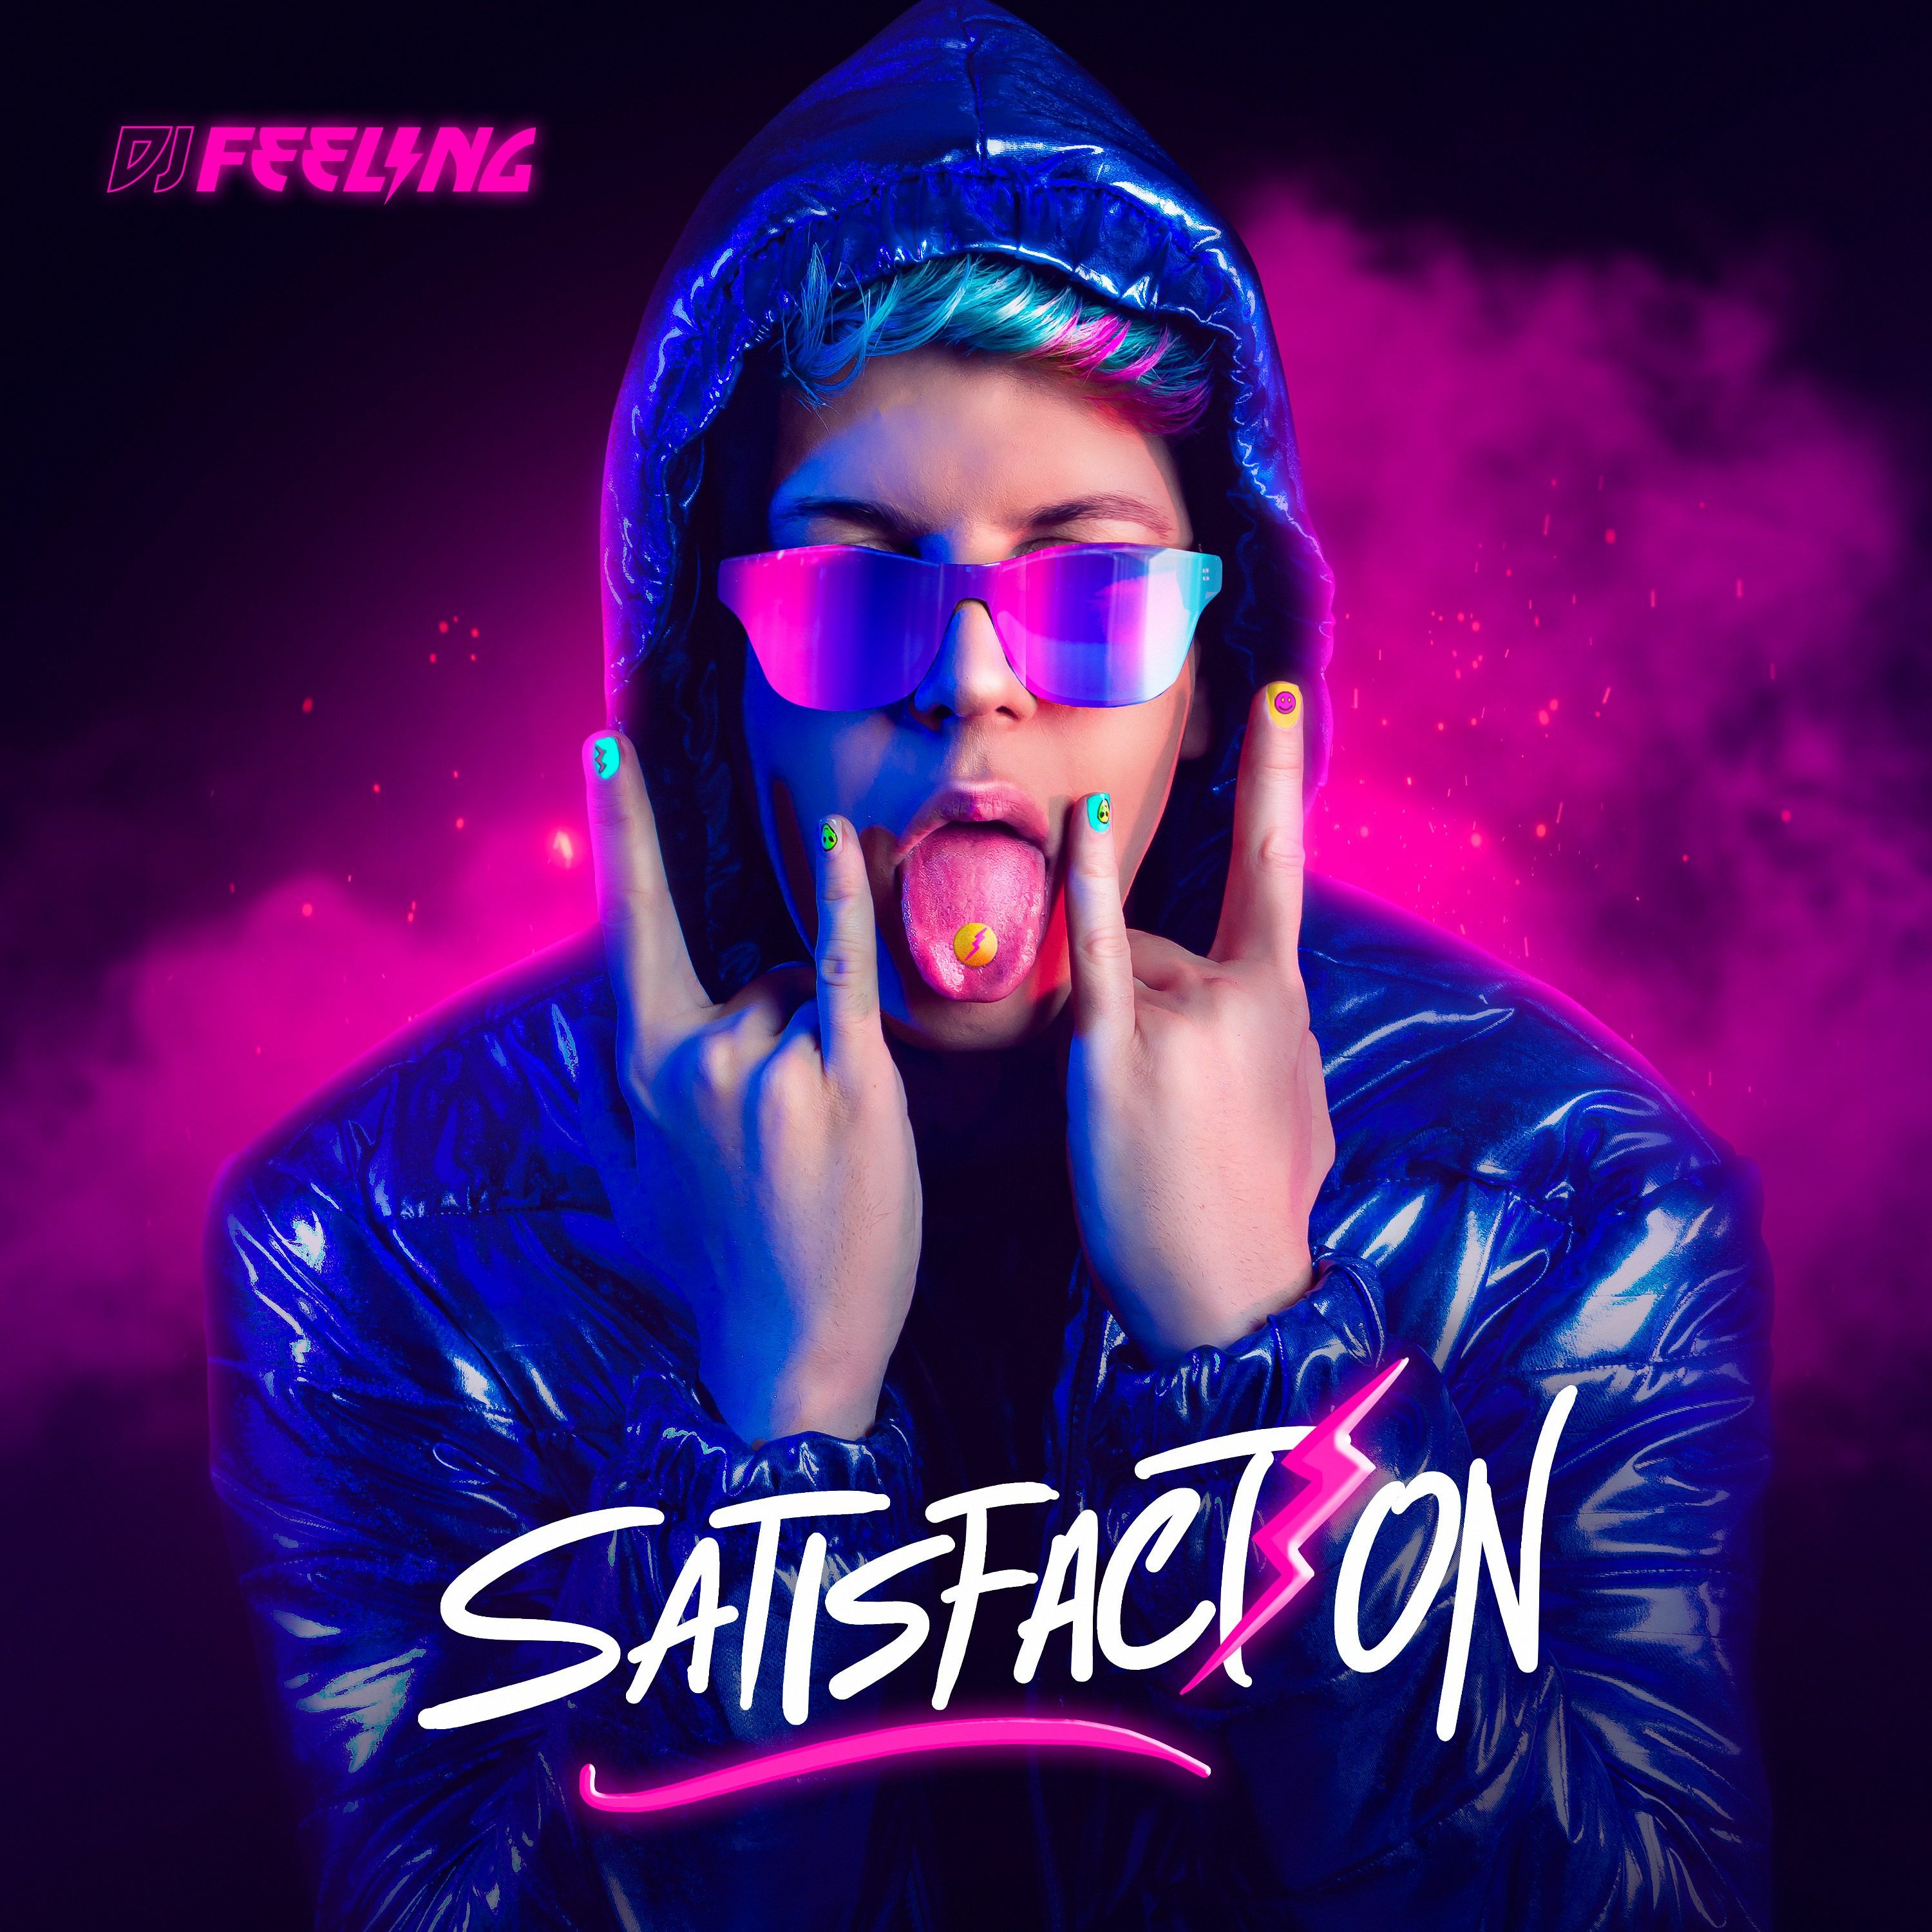 DJ FEELING - Satisfaction (Pride Mix)